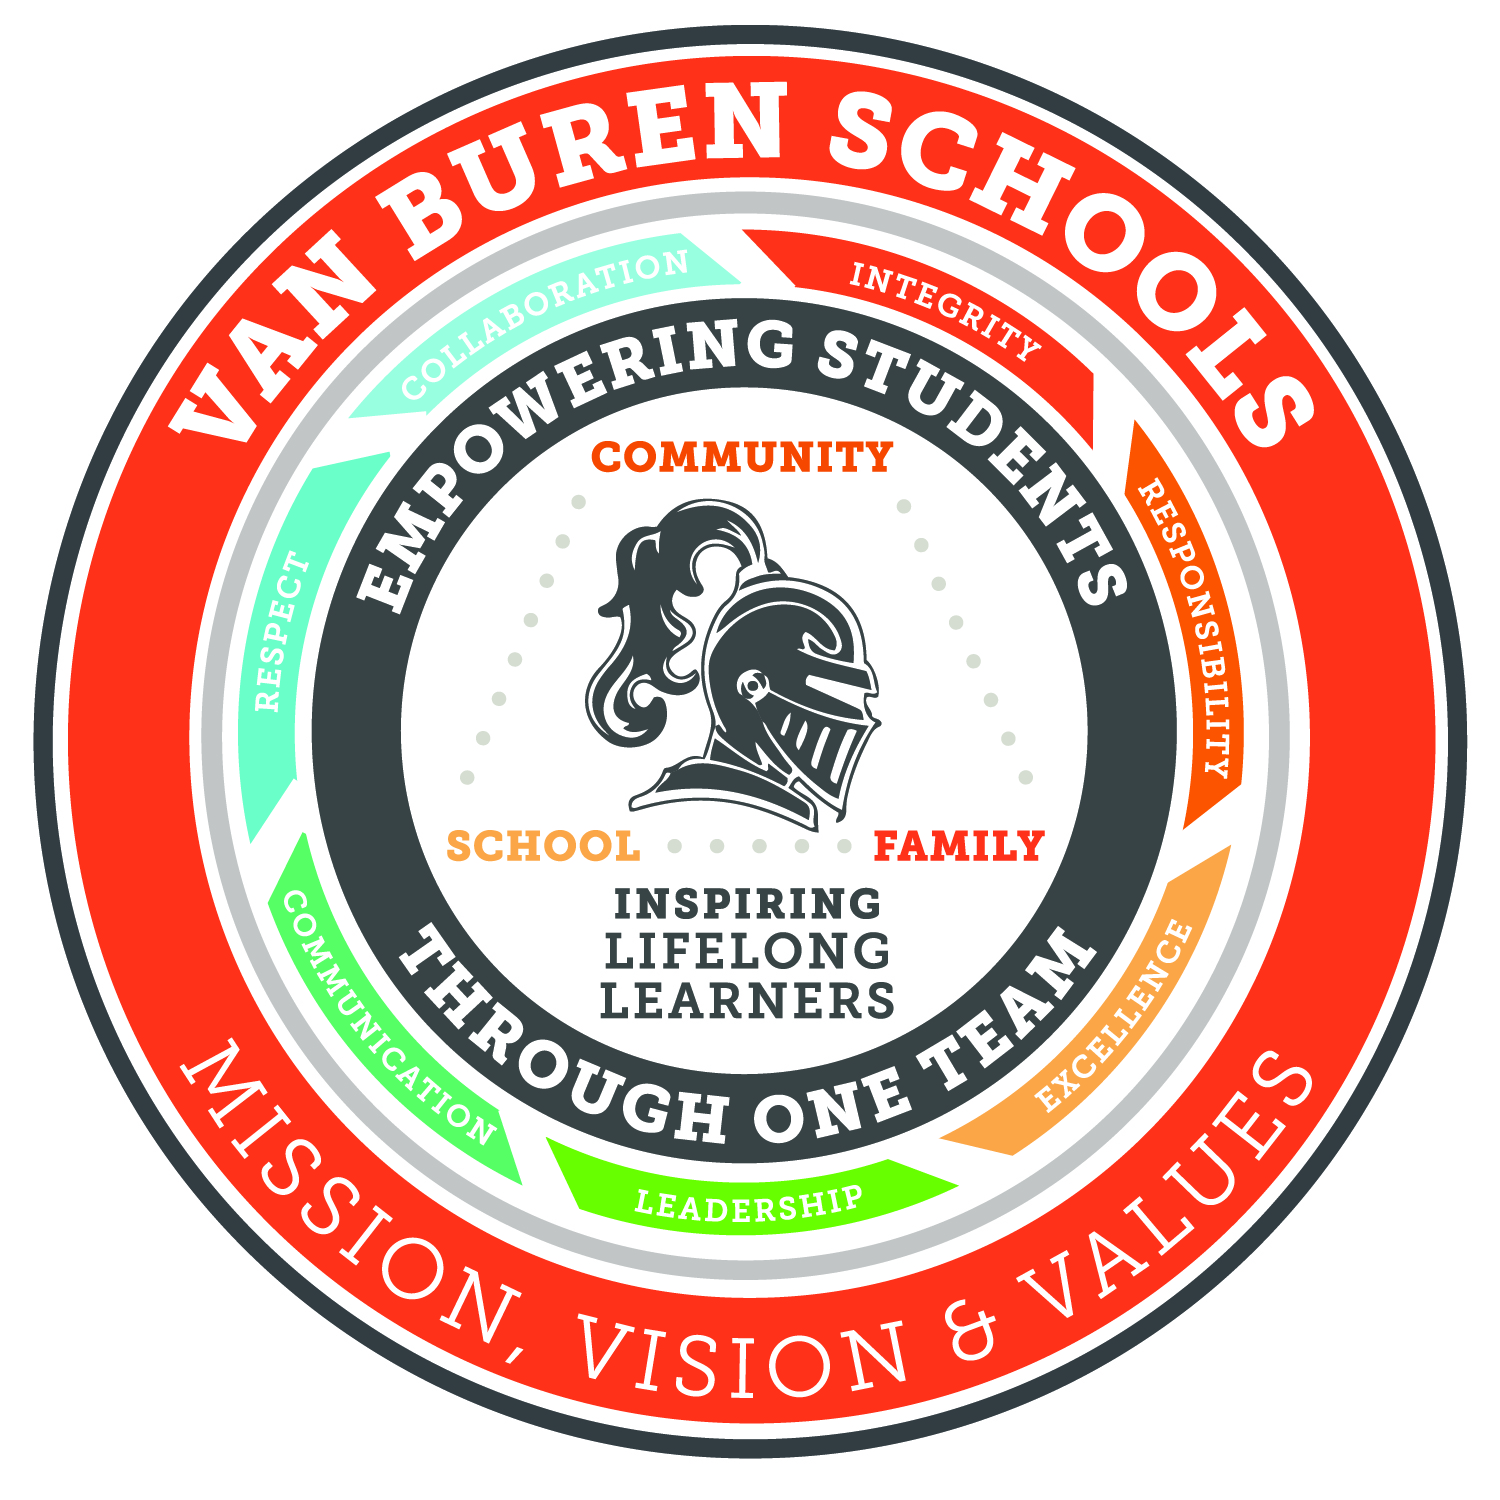 Van Buren Schools Mission, Vision & Values